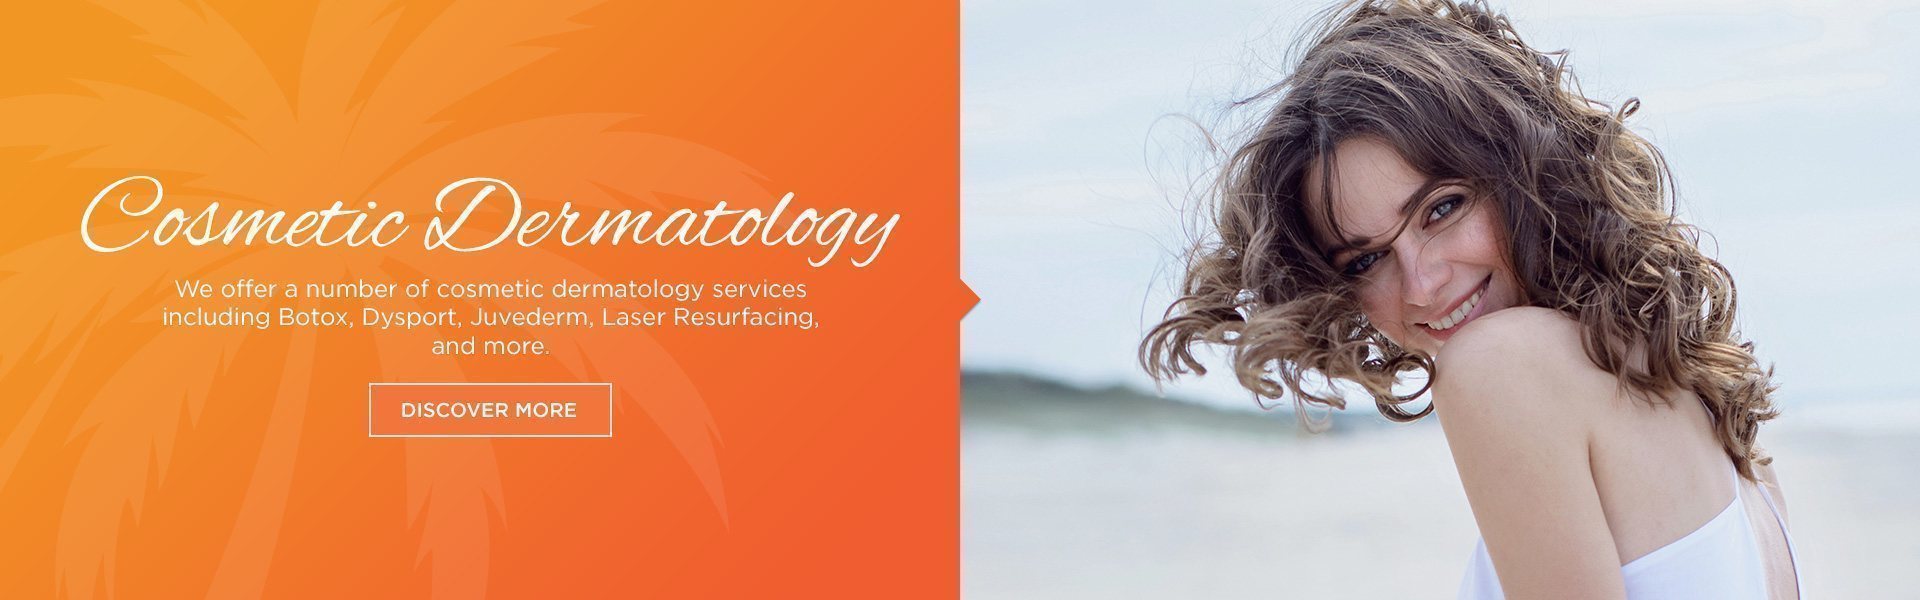 cosmetic-dermatology-slide